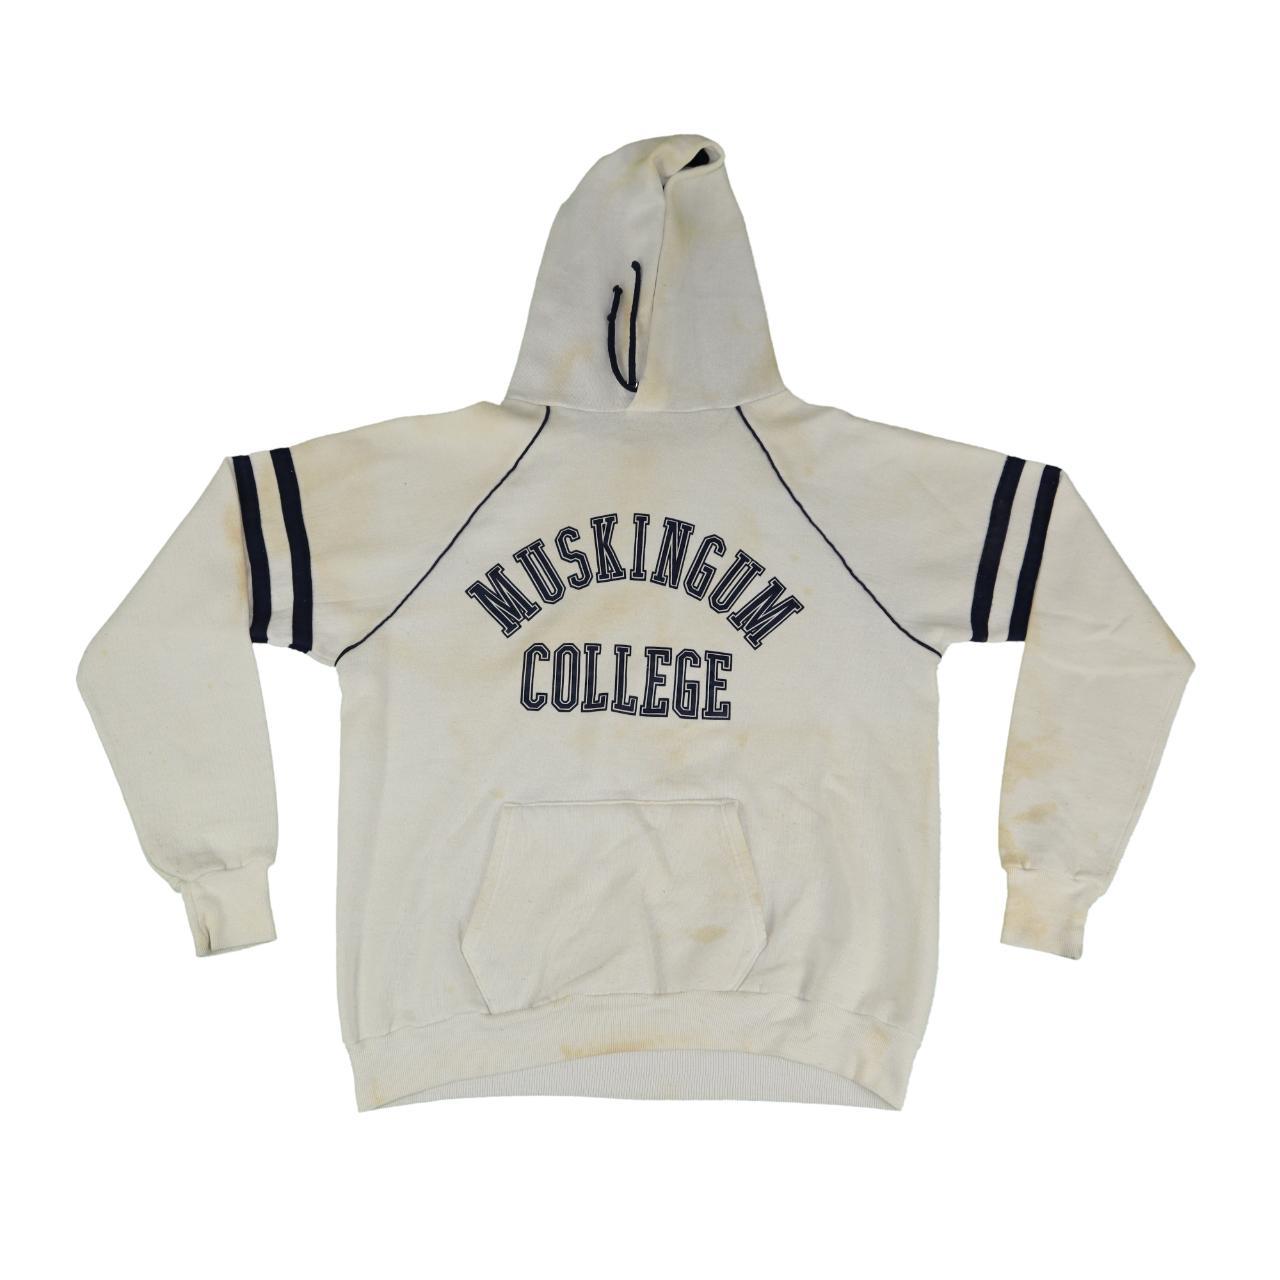 Product Image 1 - Vintage Muskingum College hoodie

SIZE: L

MEASUREMENTS

WIDTH: